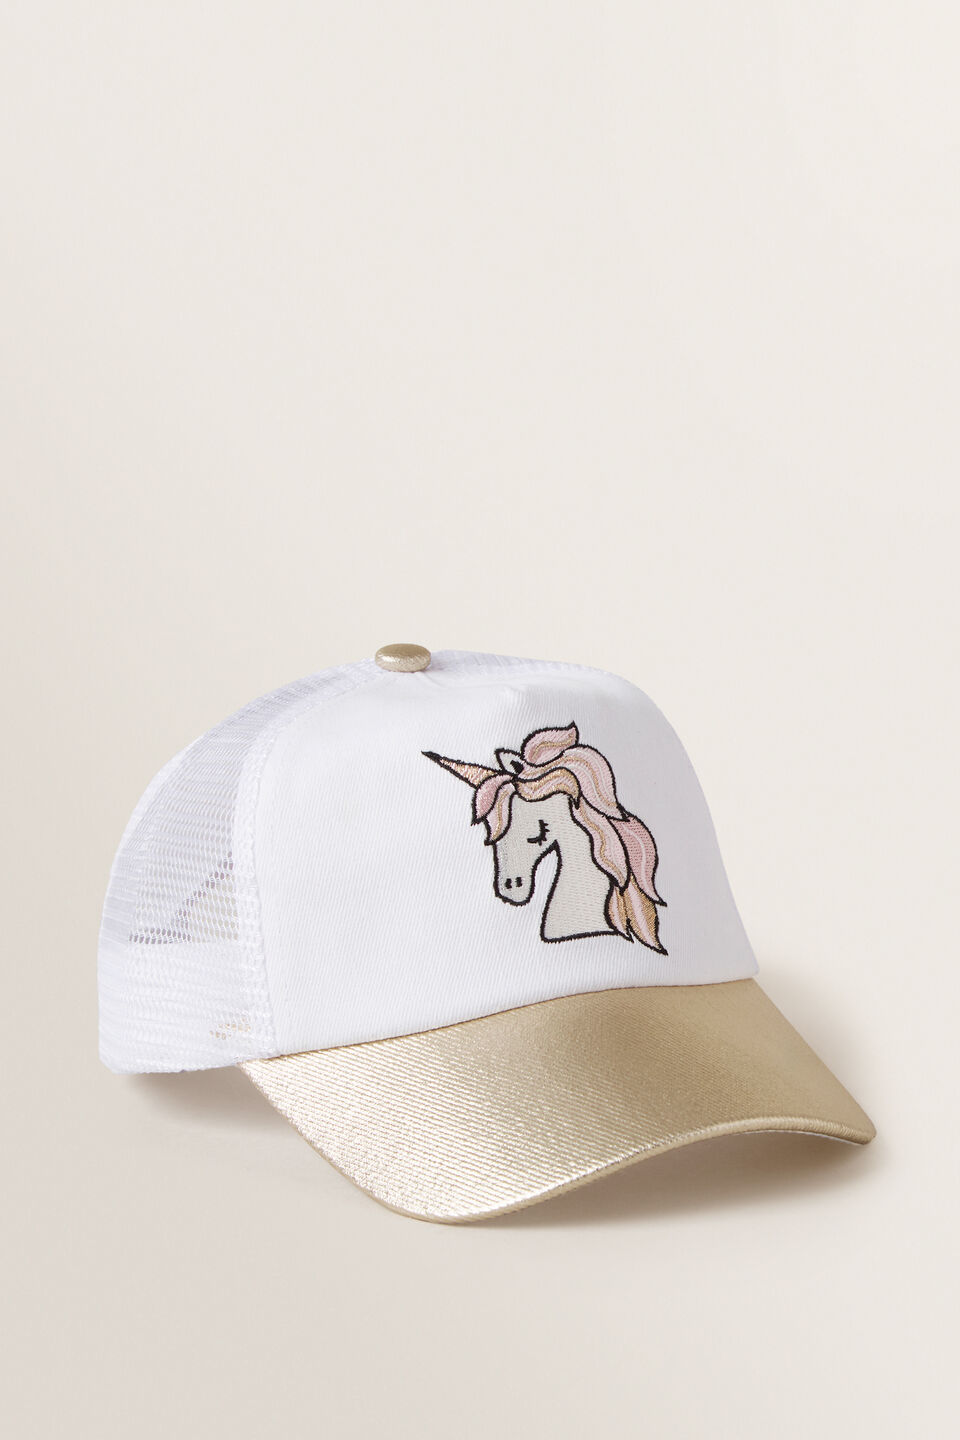 Embroidered Unicorn Cap  9